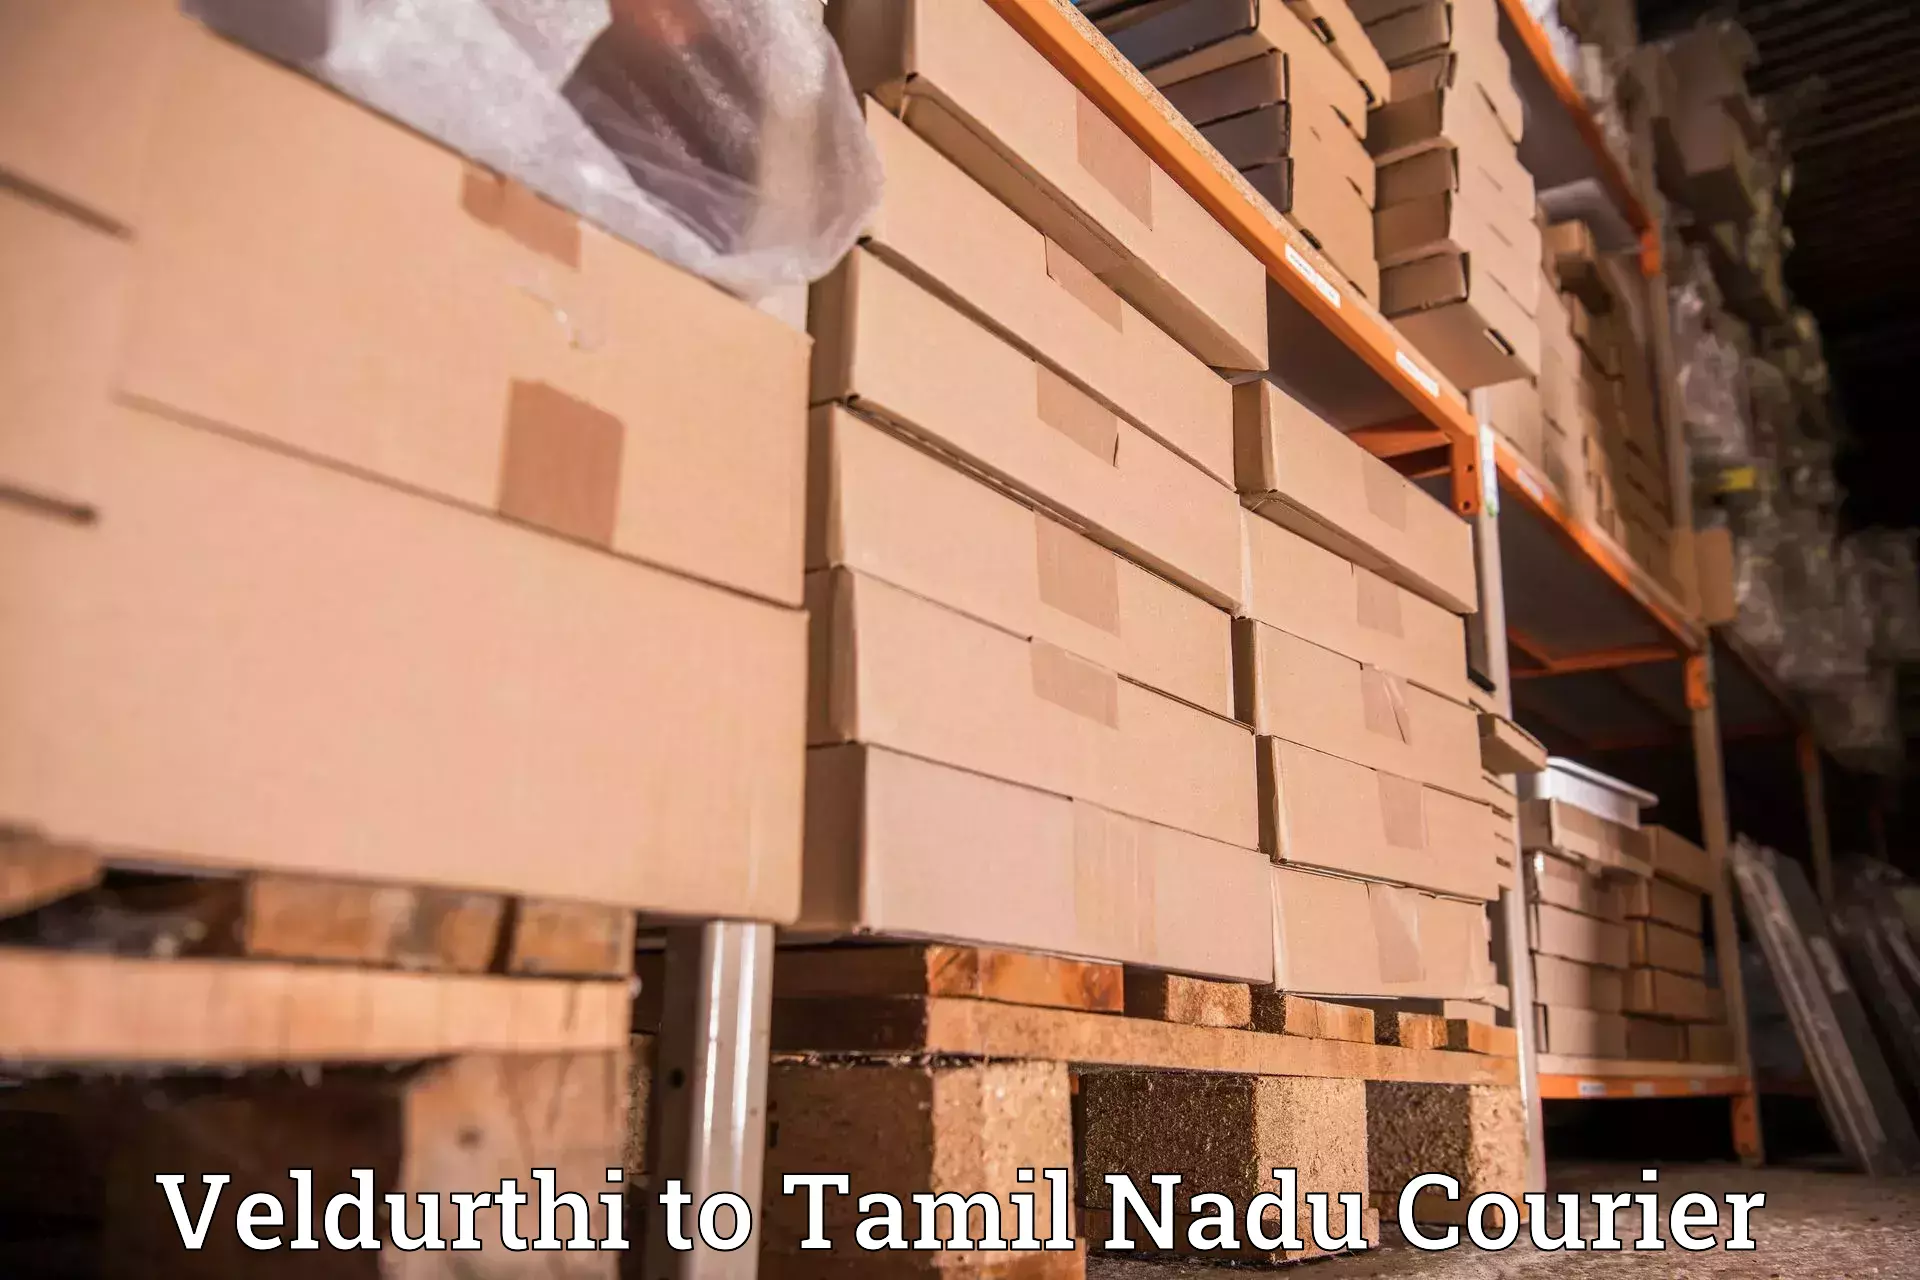 Package delivery network Veldurthi to Virudhunagar